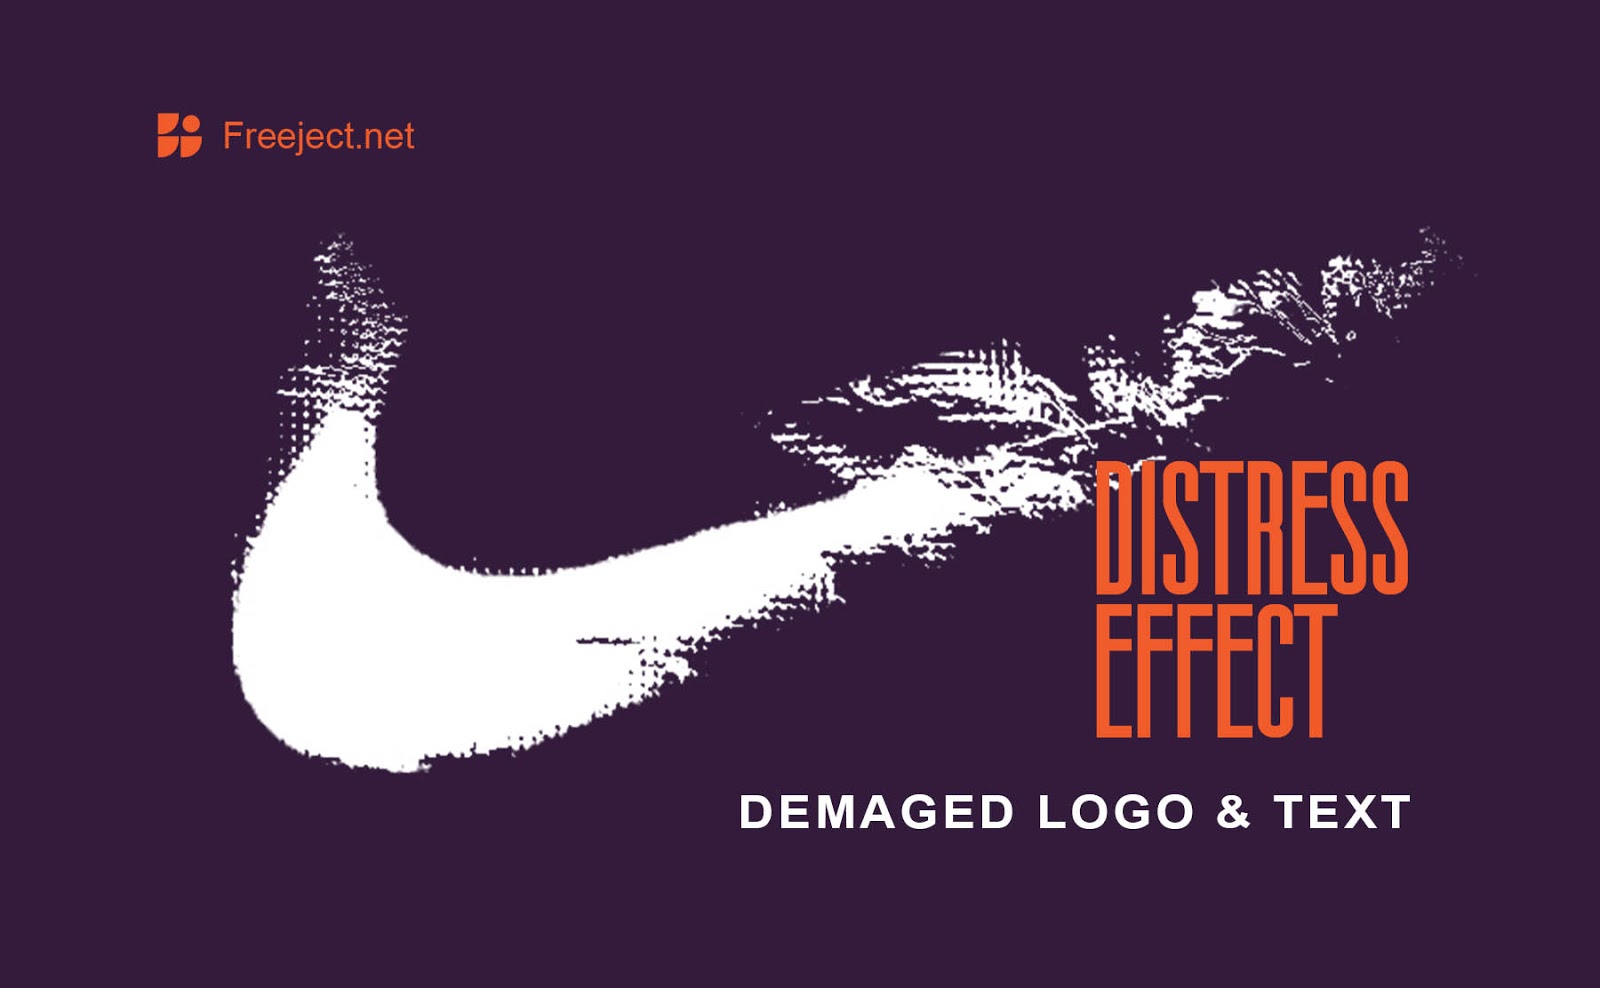 Схватка текст. Damage логотип. Destroy лого. Distortion Mash text & logo Effect.